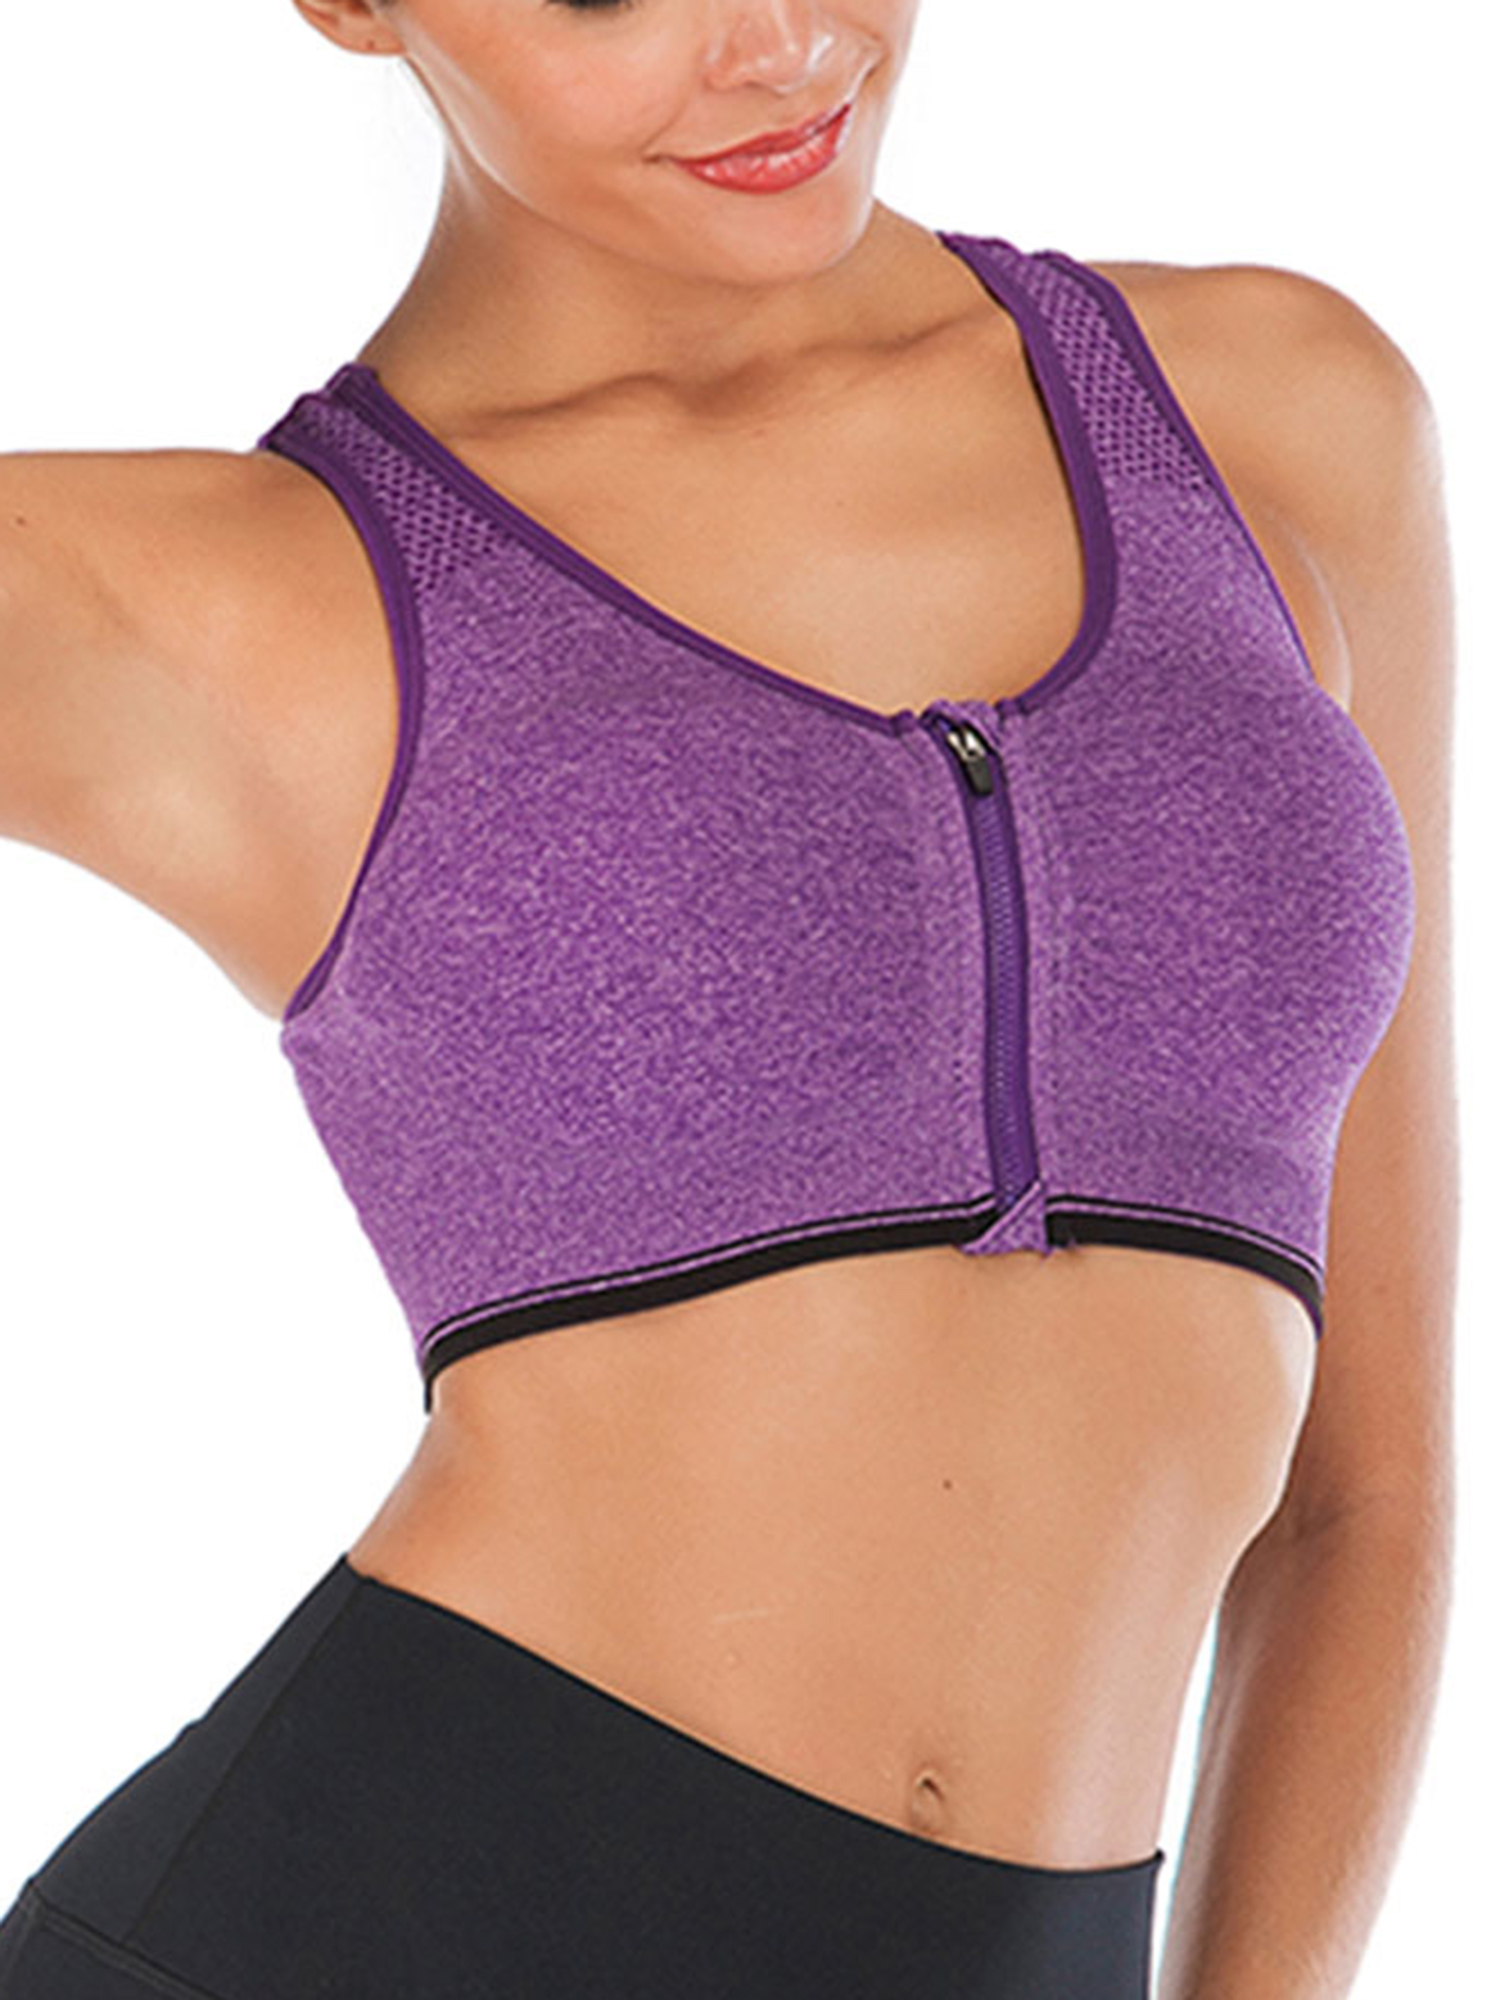 FUTATA Womens Post Op Bras Racerback Sports Bras Comfort High Impact Workout Activewear Tops Zipper Front Close Post-Surgery Bra - image 4 of 7